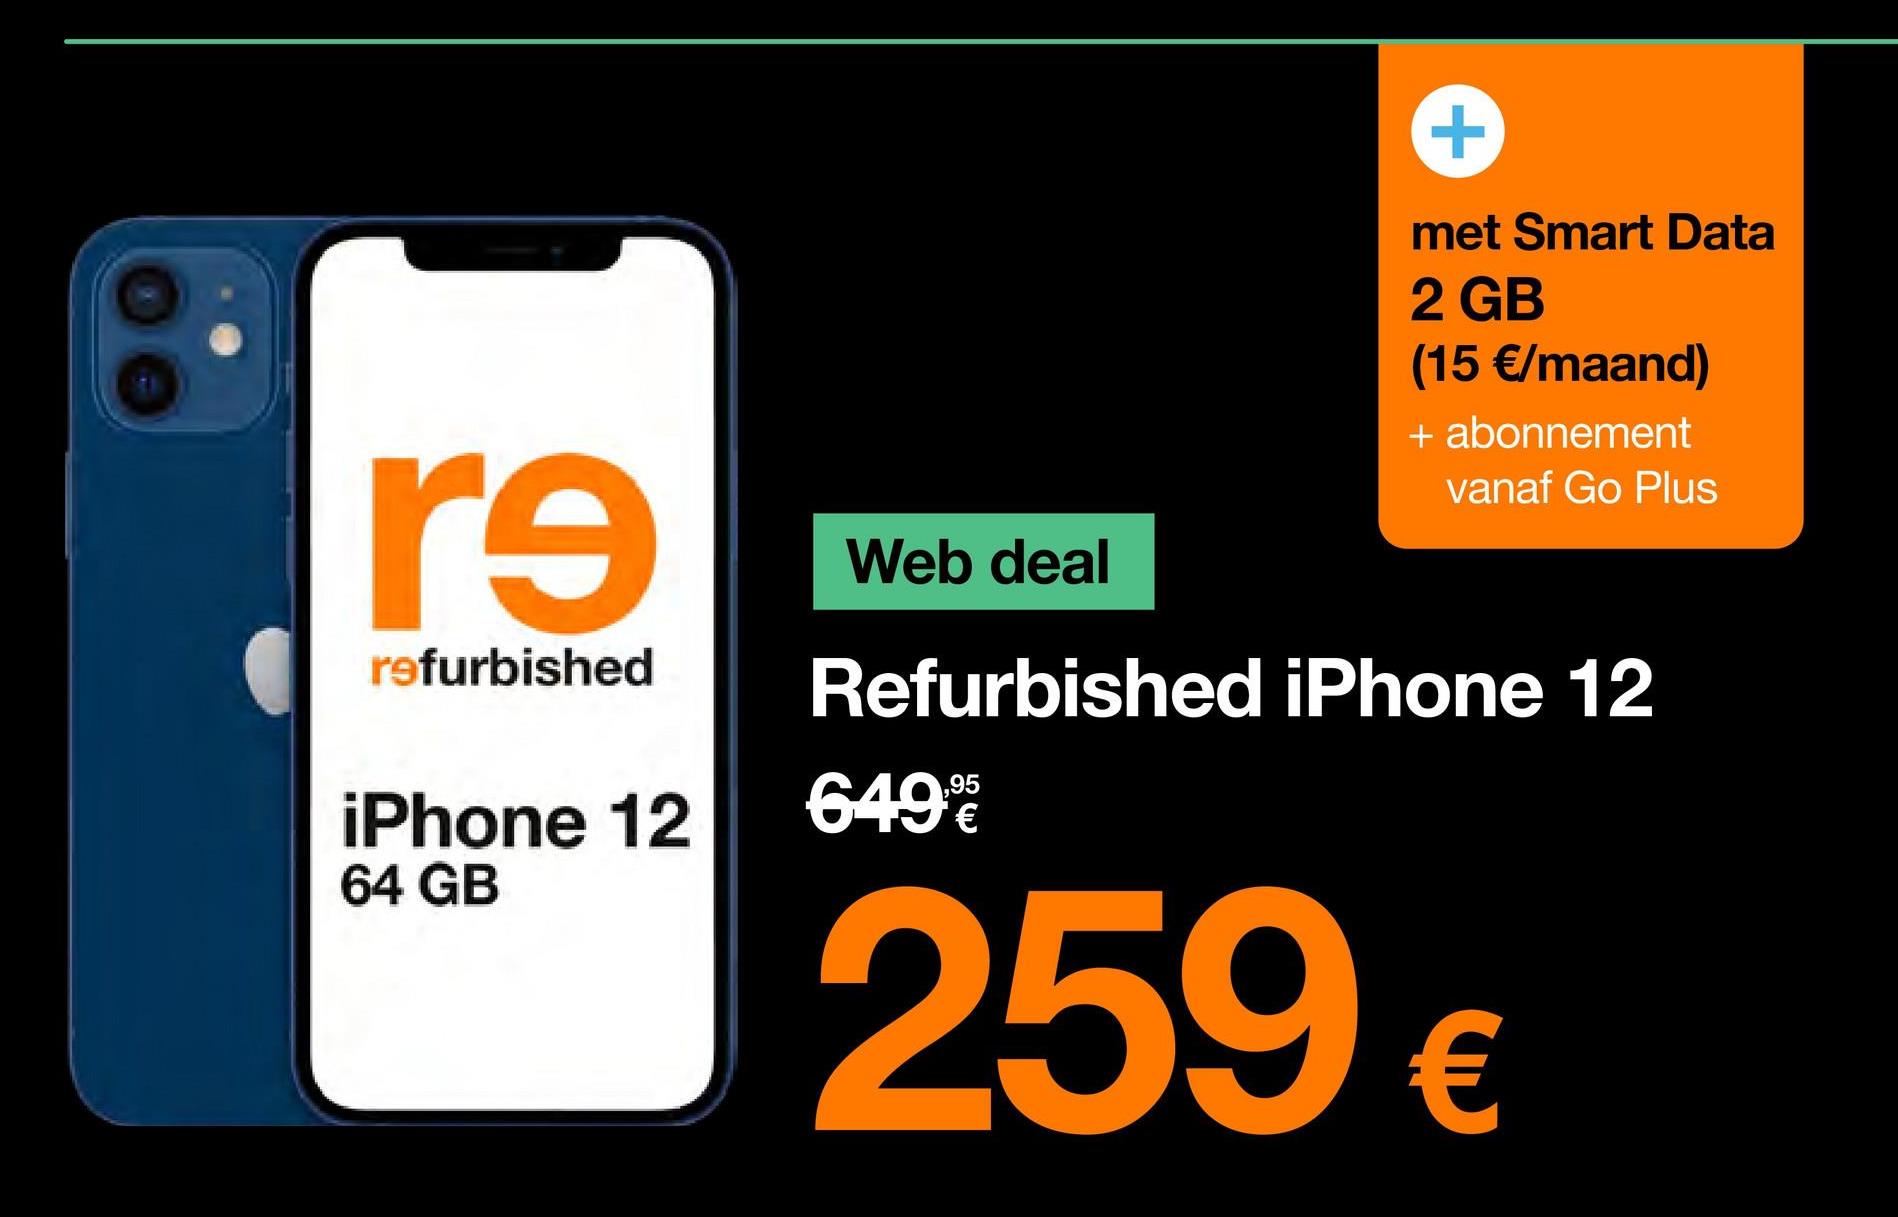 r9
refurbished
iPhone 12
64 GB
+
met Smart Data
2 GB
(15 €/maand)
649%
+ abonnement
vanaf Go Plus
Web deal
Refurbished iPhone 12
259 €